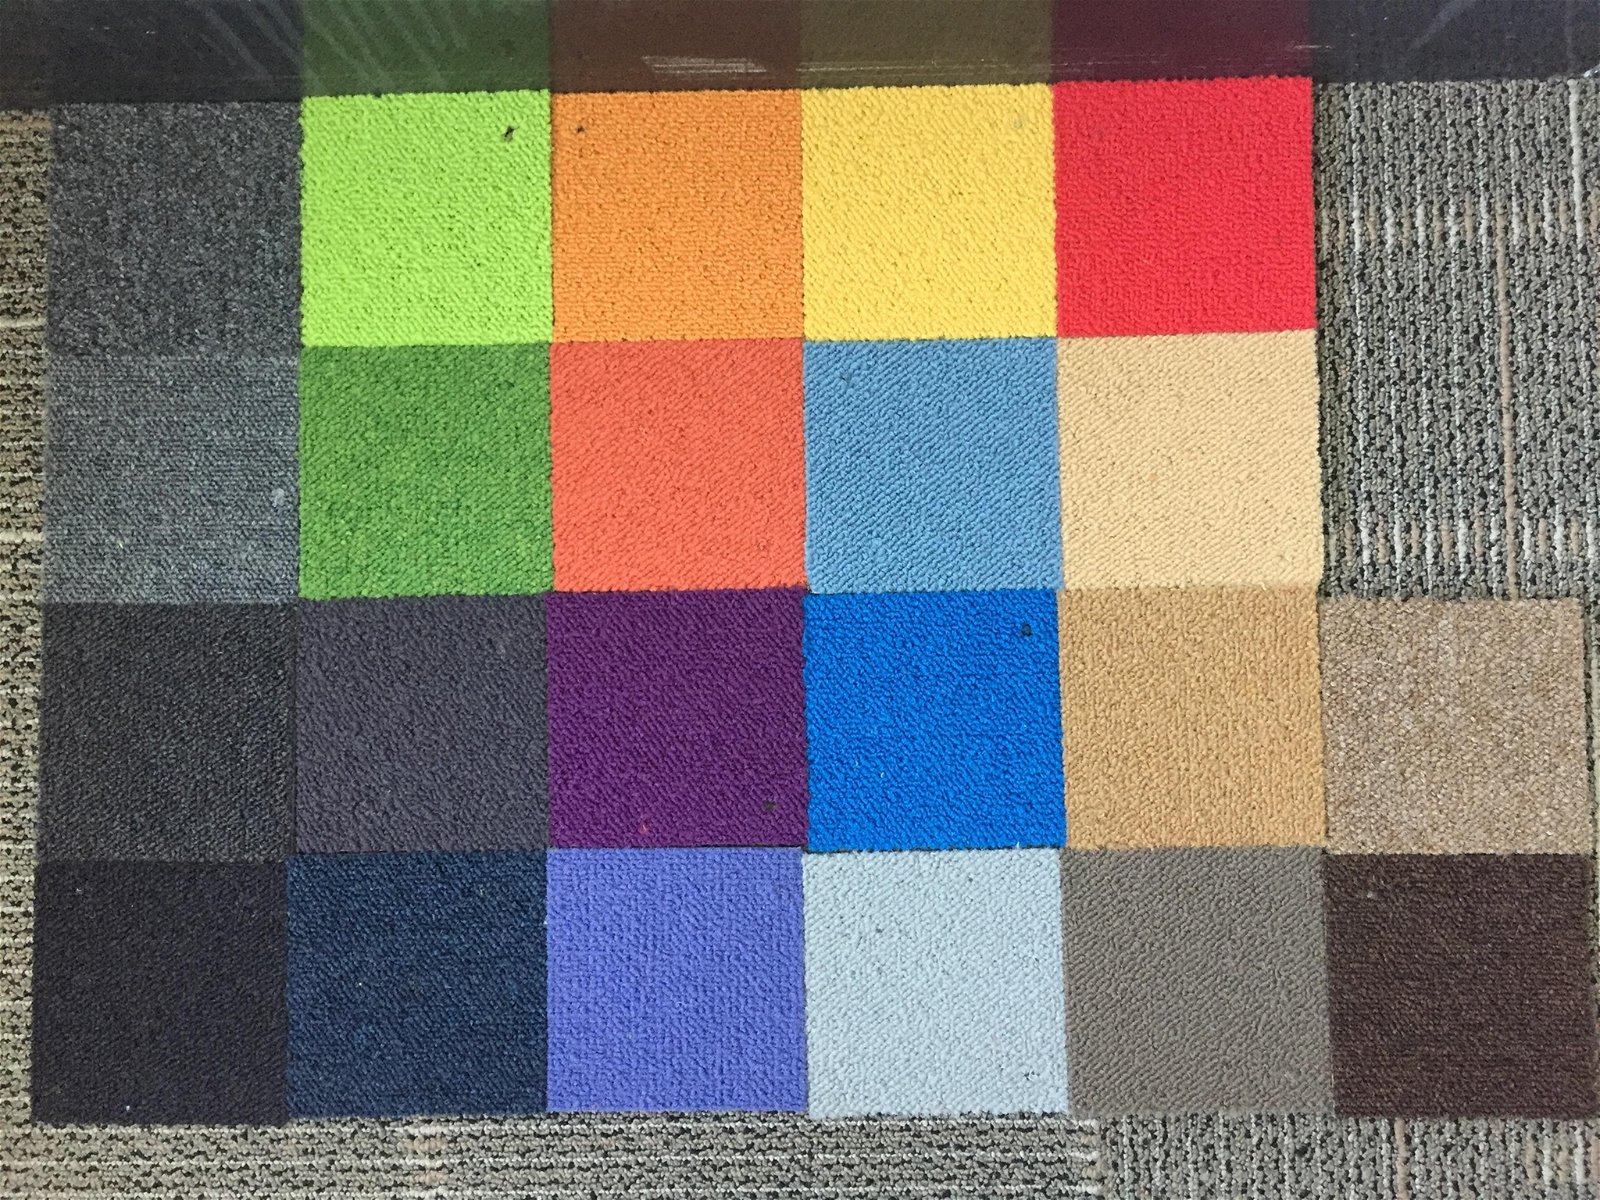 Tile carpet